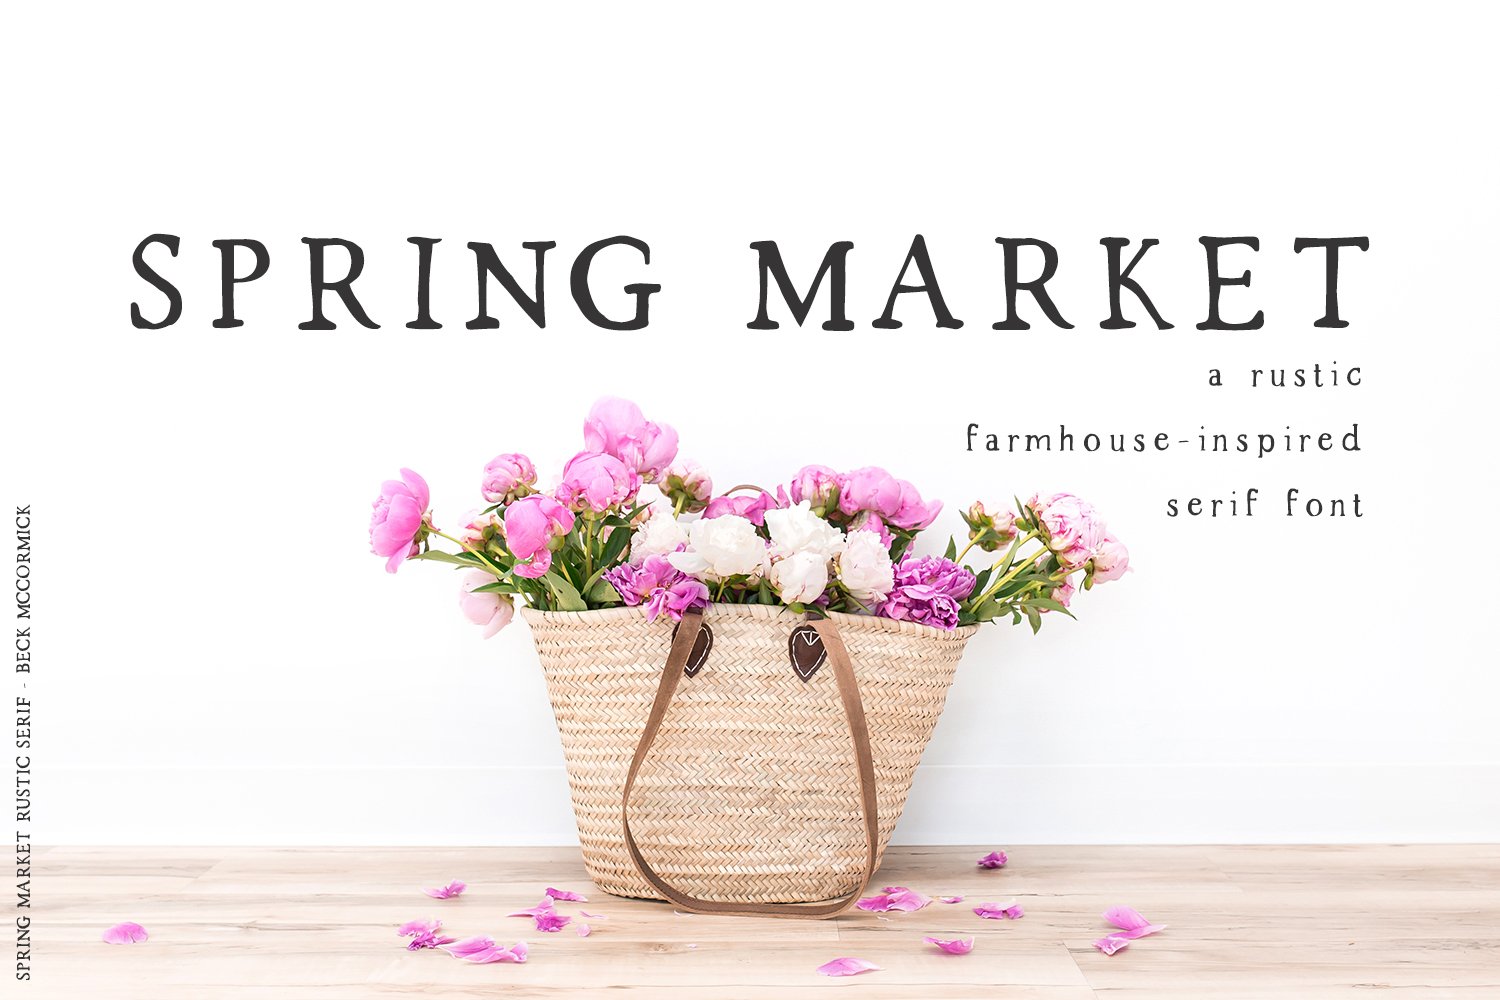 Spring Market - Rustic Font cover image.